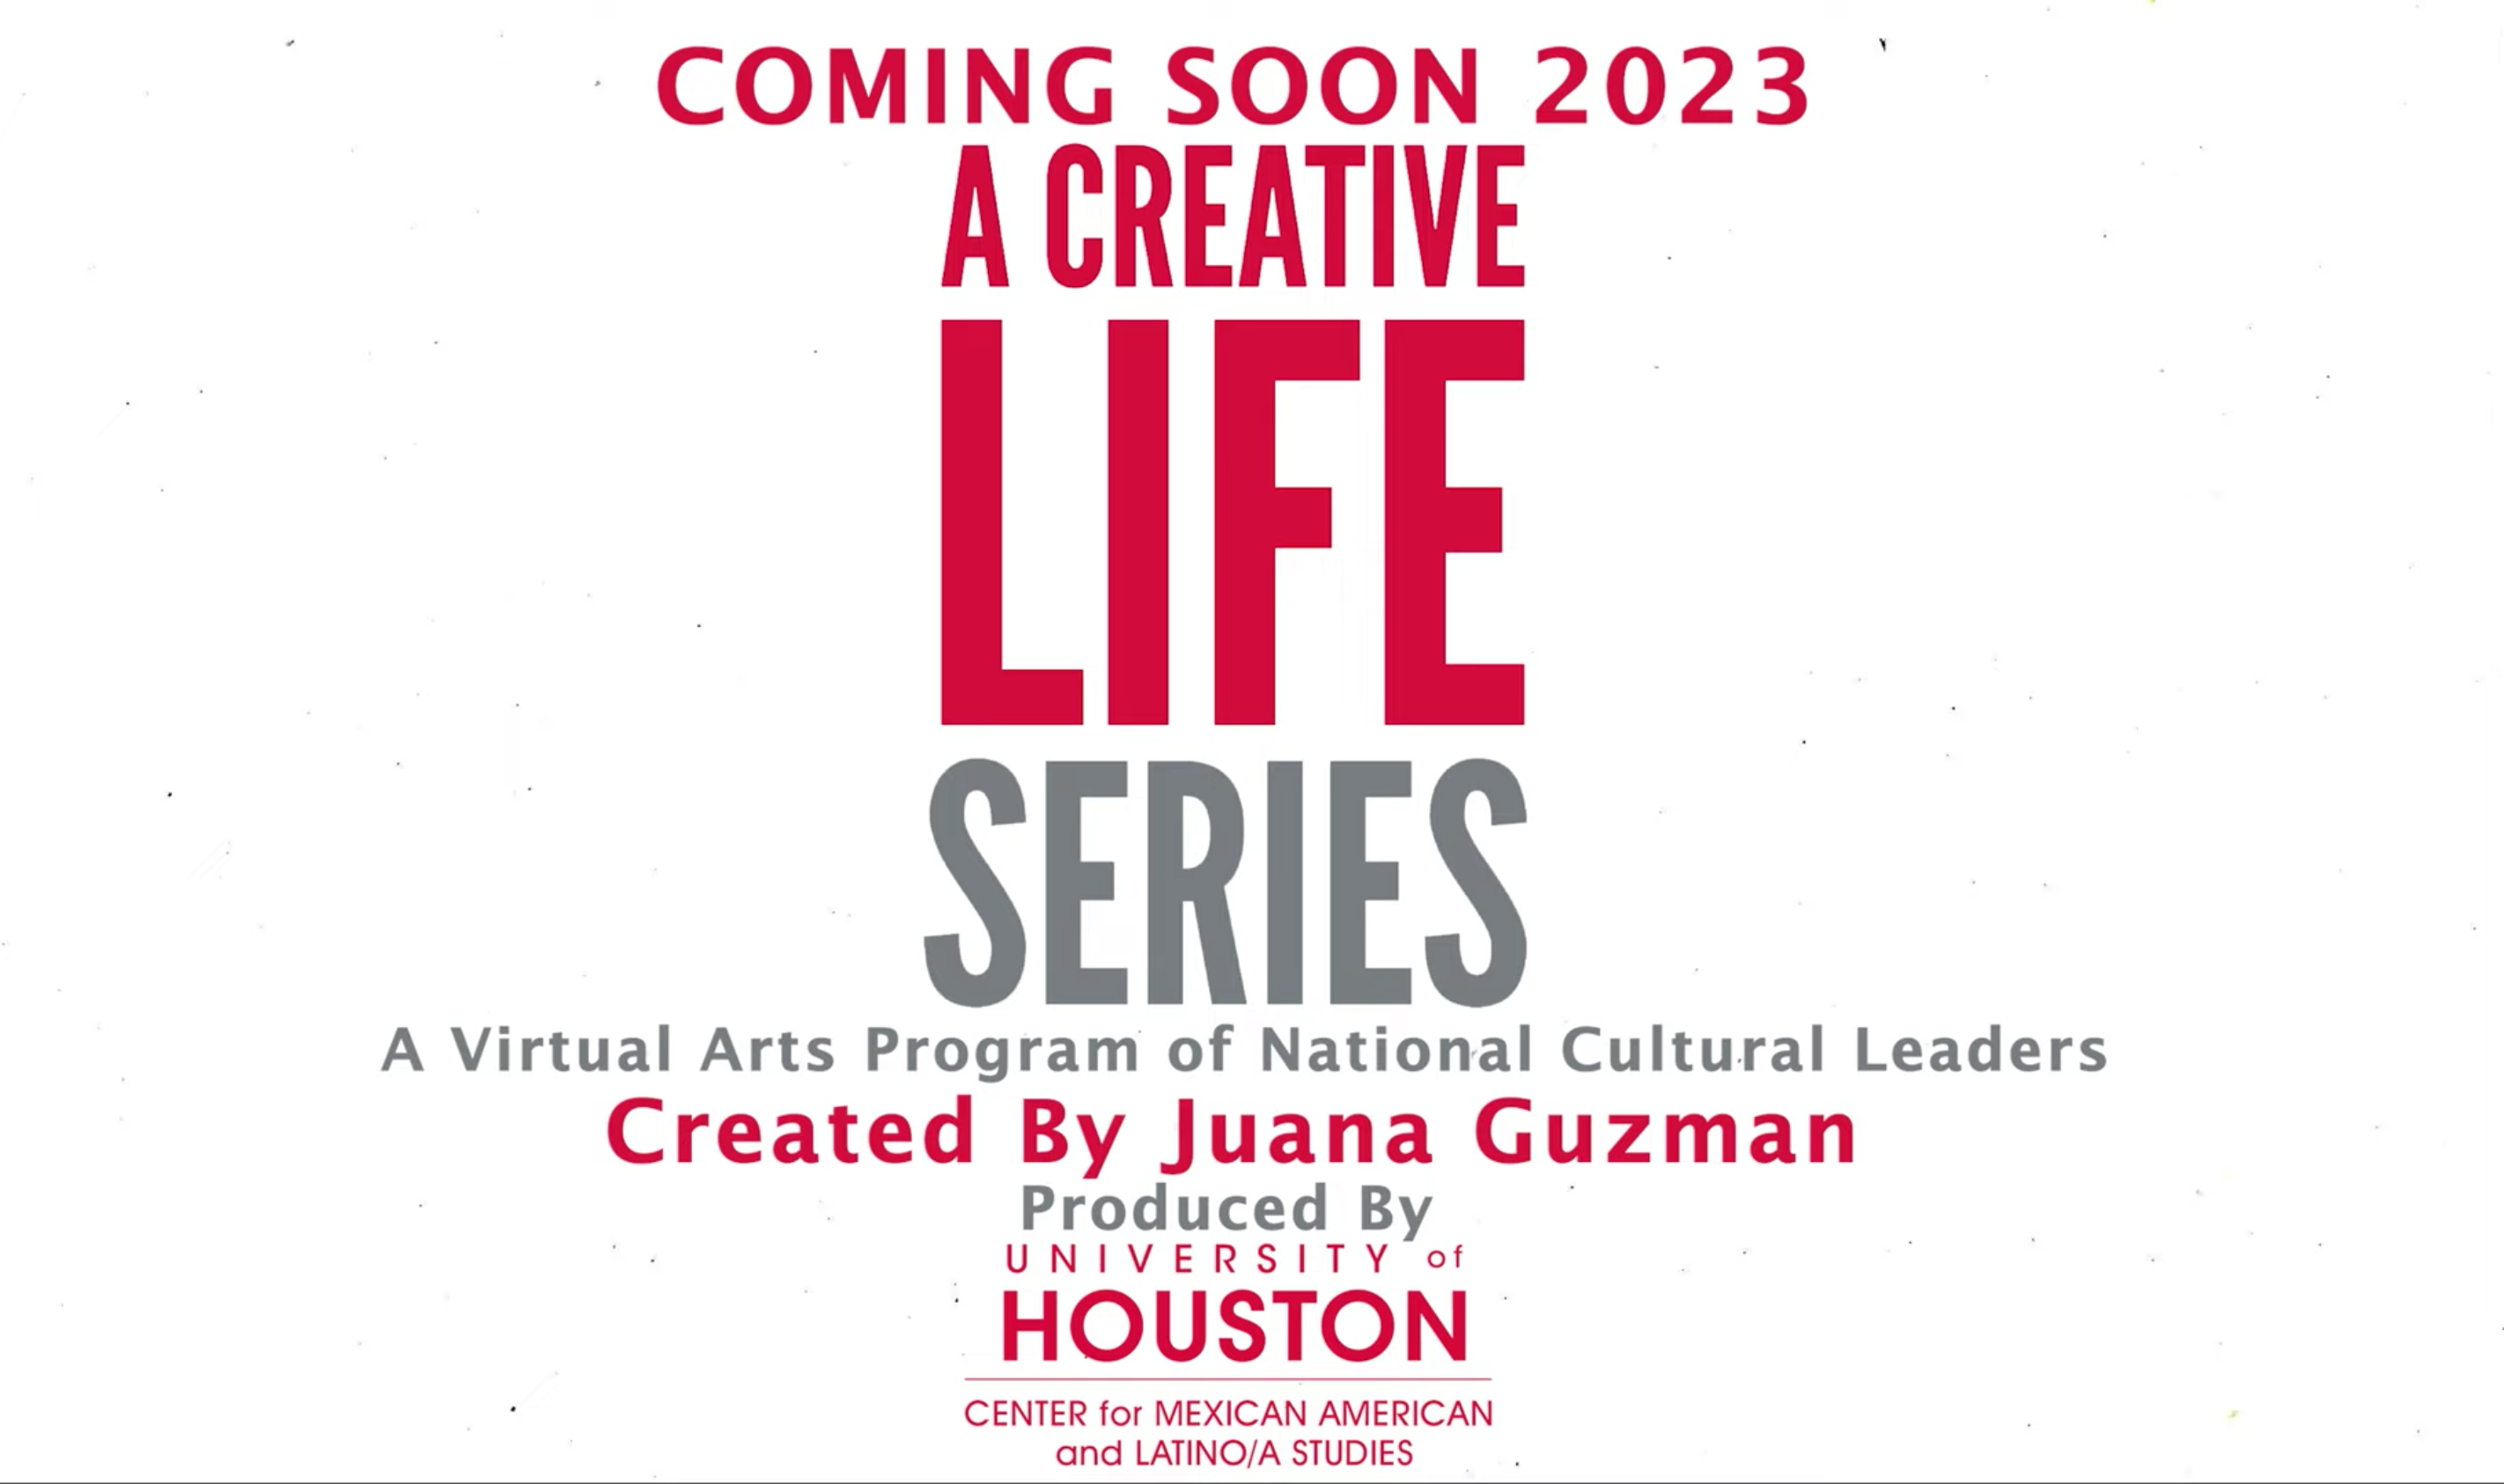 Creative Life Series Announcement